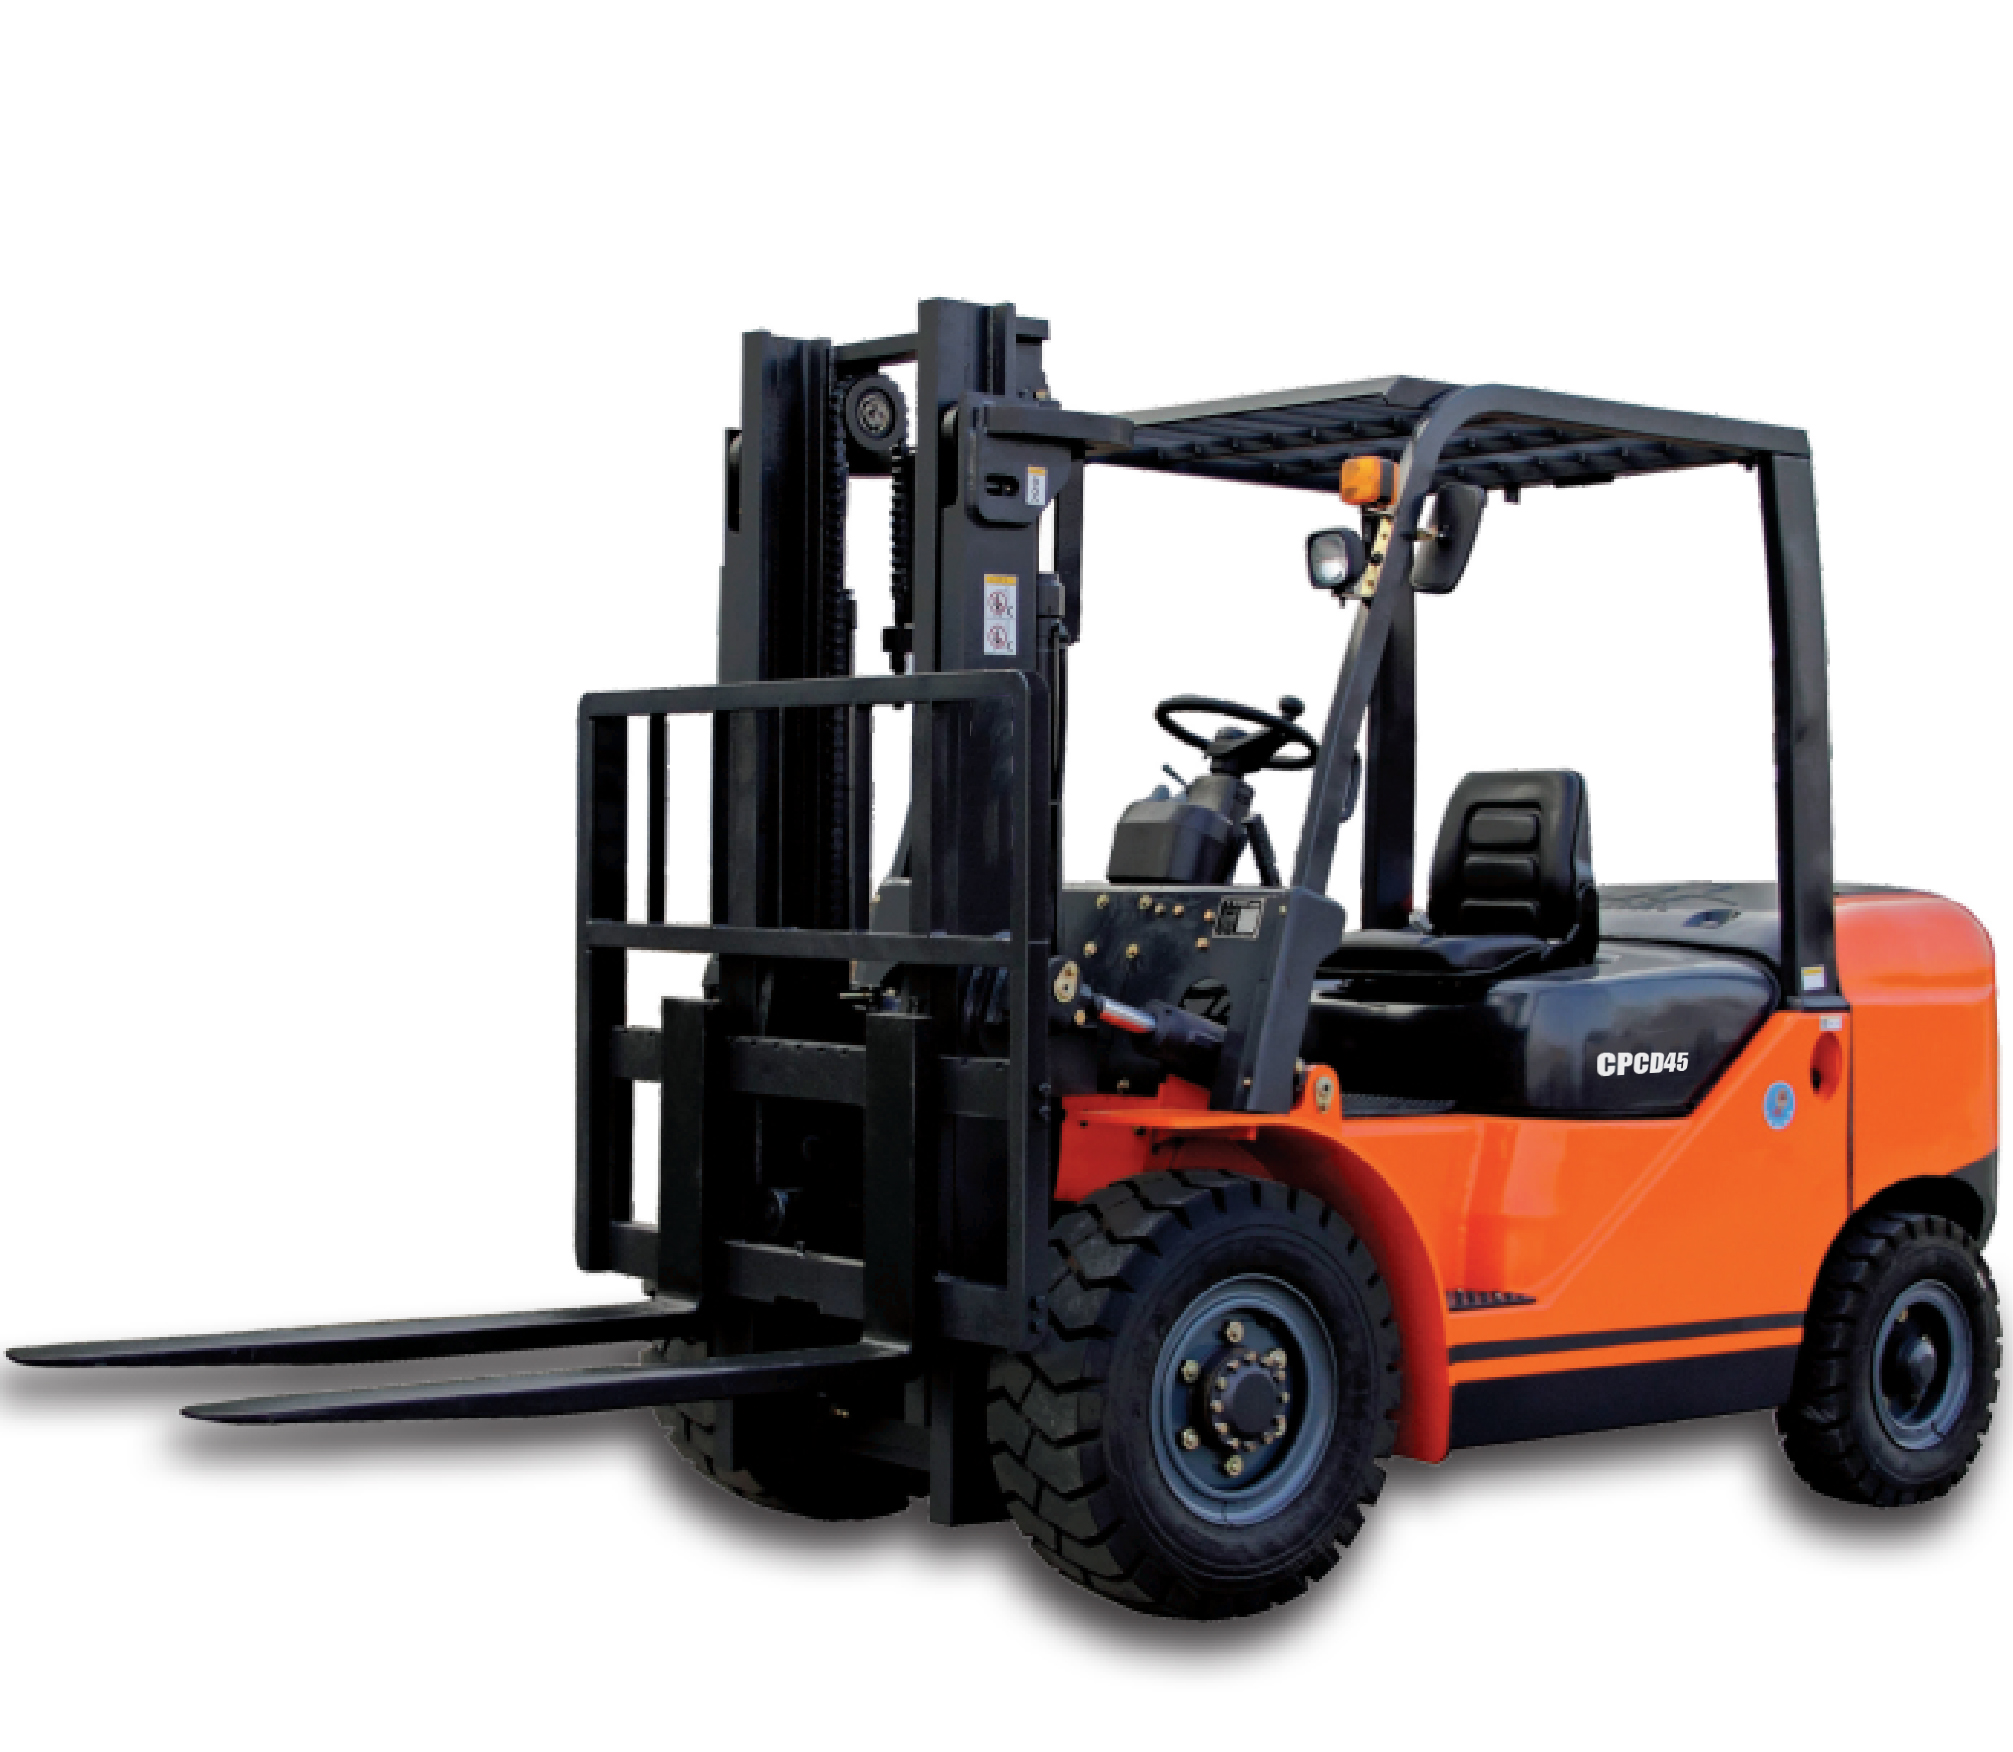 Diesel Counterbalanced Forklift